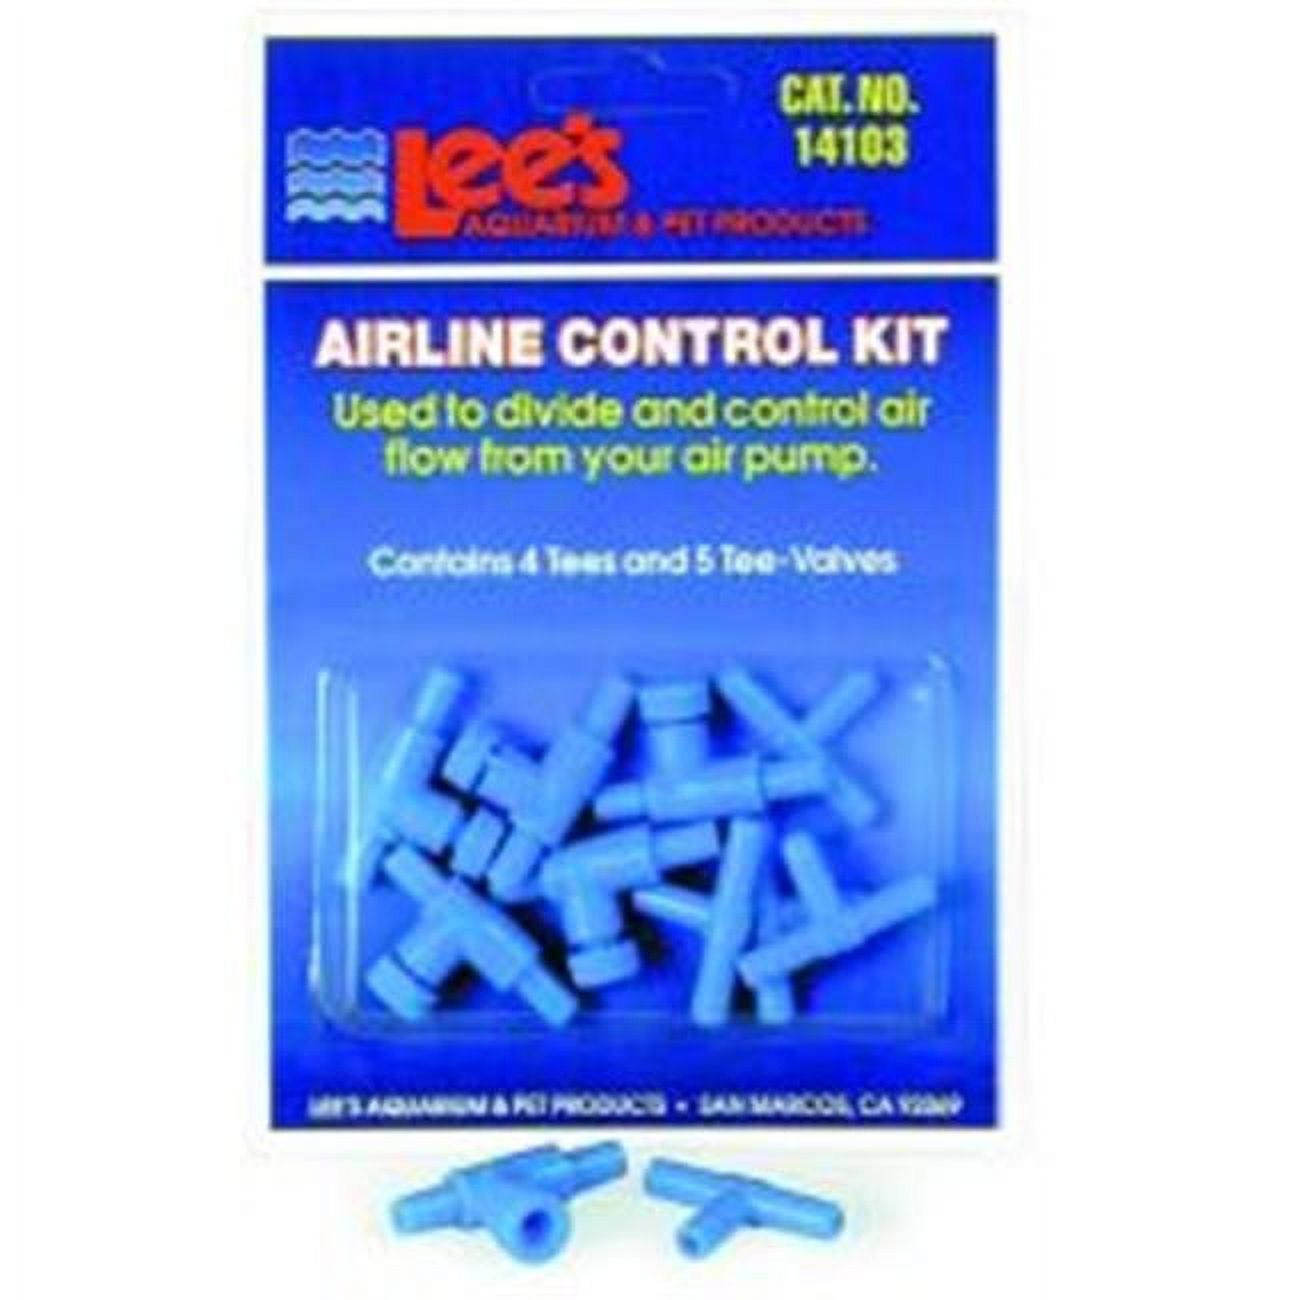 Lee S Aquarium & Pet Products Airline Control Kit - 14103 - image 1 of 2